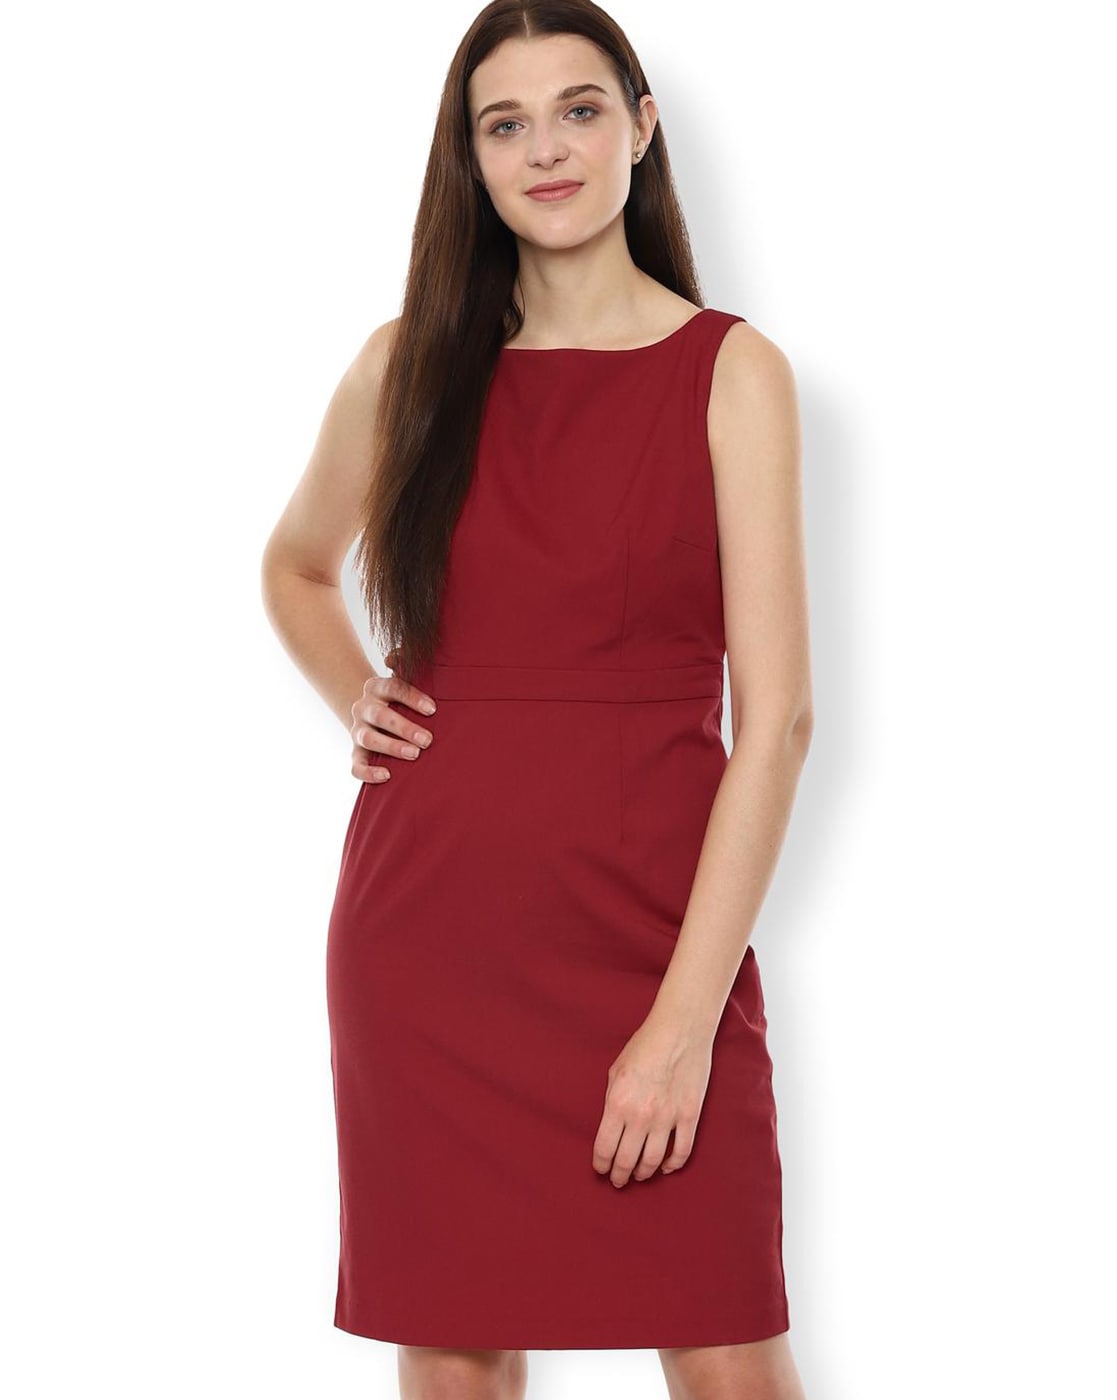 red sleeveless sheath dress